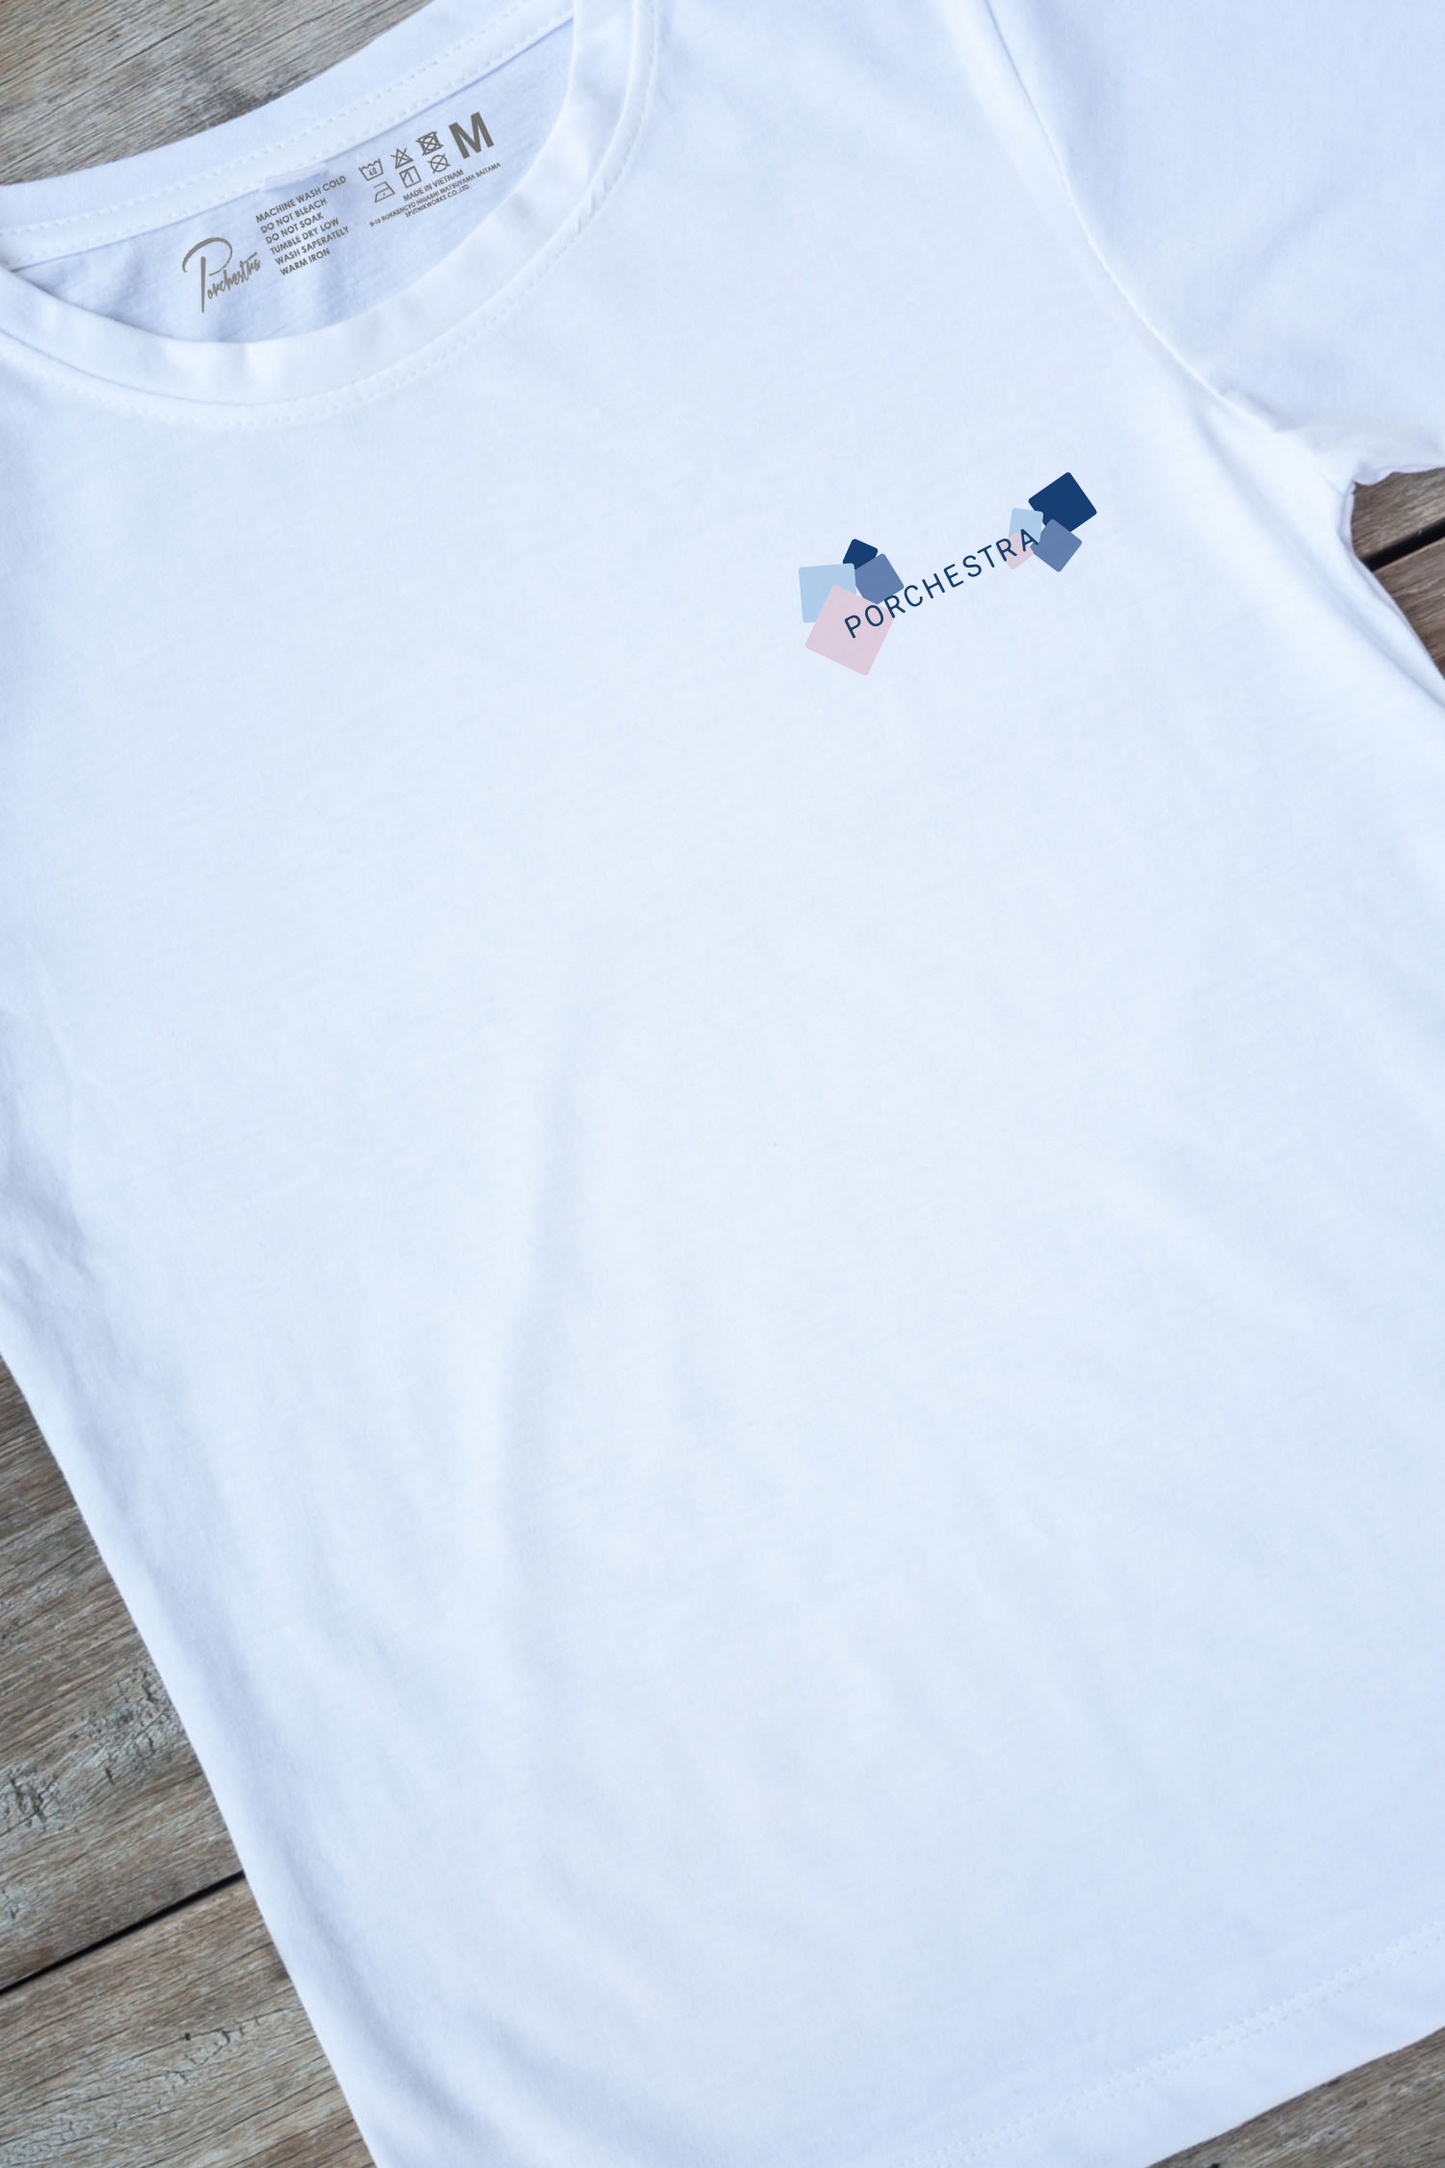 【PORCHESTRA】女性らしいワンポイントが魅力的なロゴTシャツ！/ピンクブルーロゴTシャツ -Pink Blue Logo Tee/cotton 100%/size:XS-XXL】Simple Logo Tee